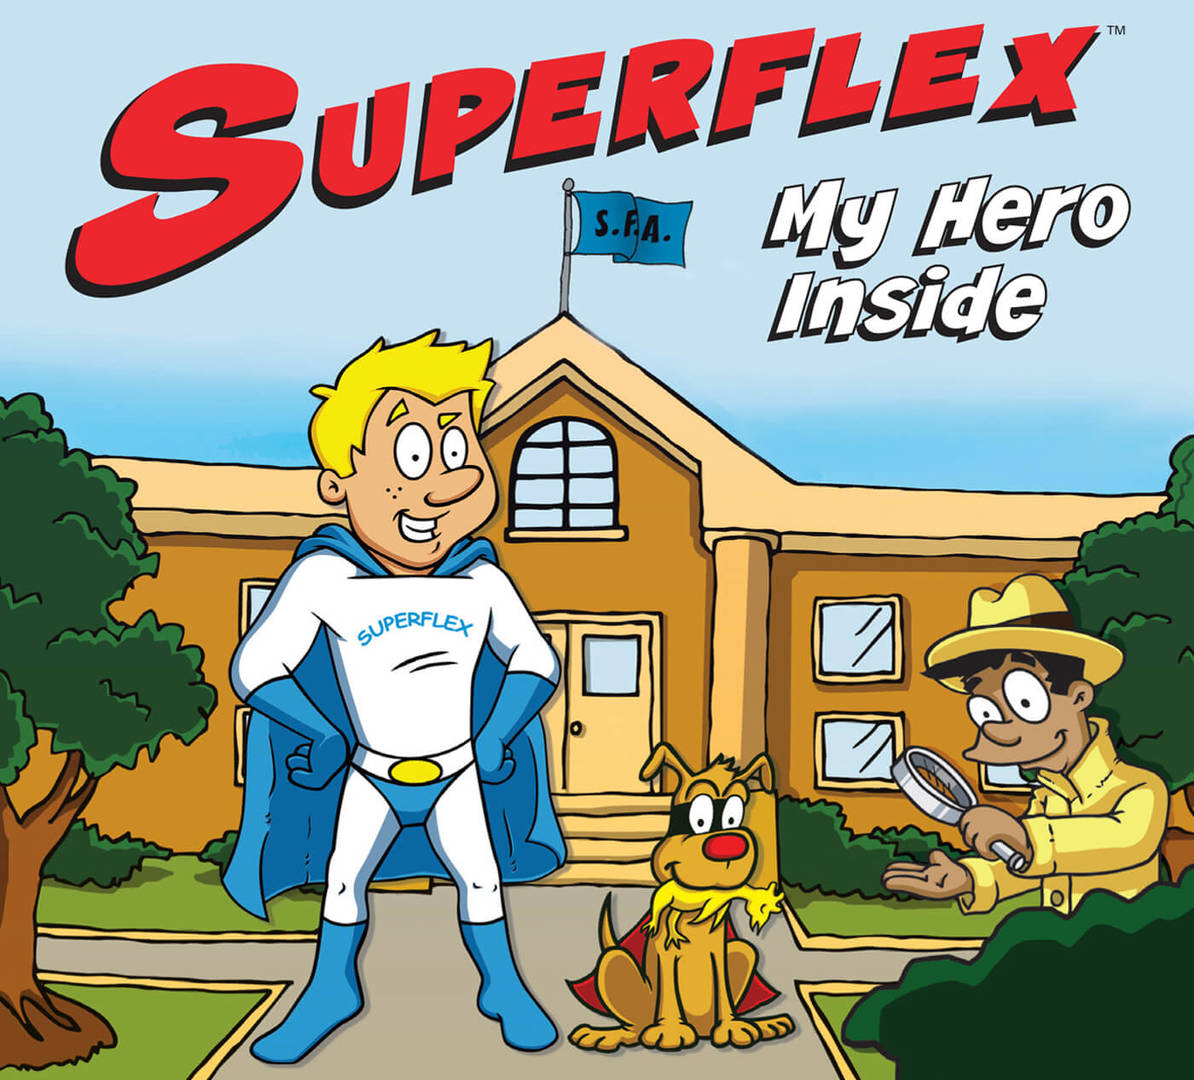 Superflex My Hero Inside